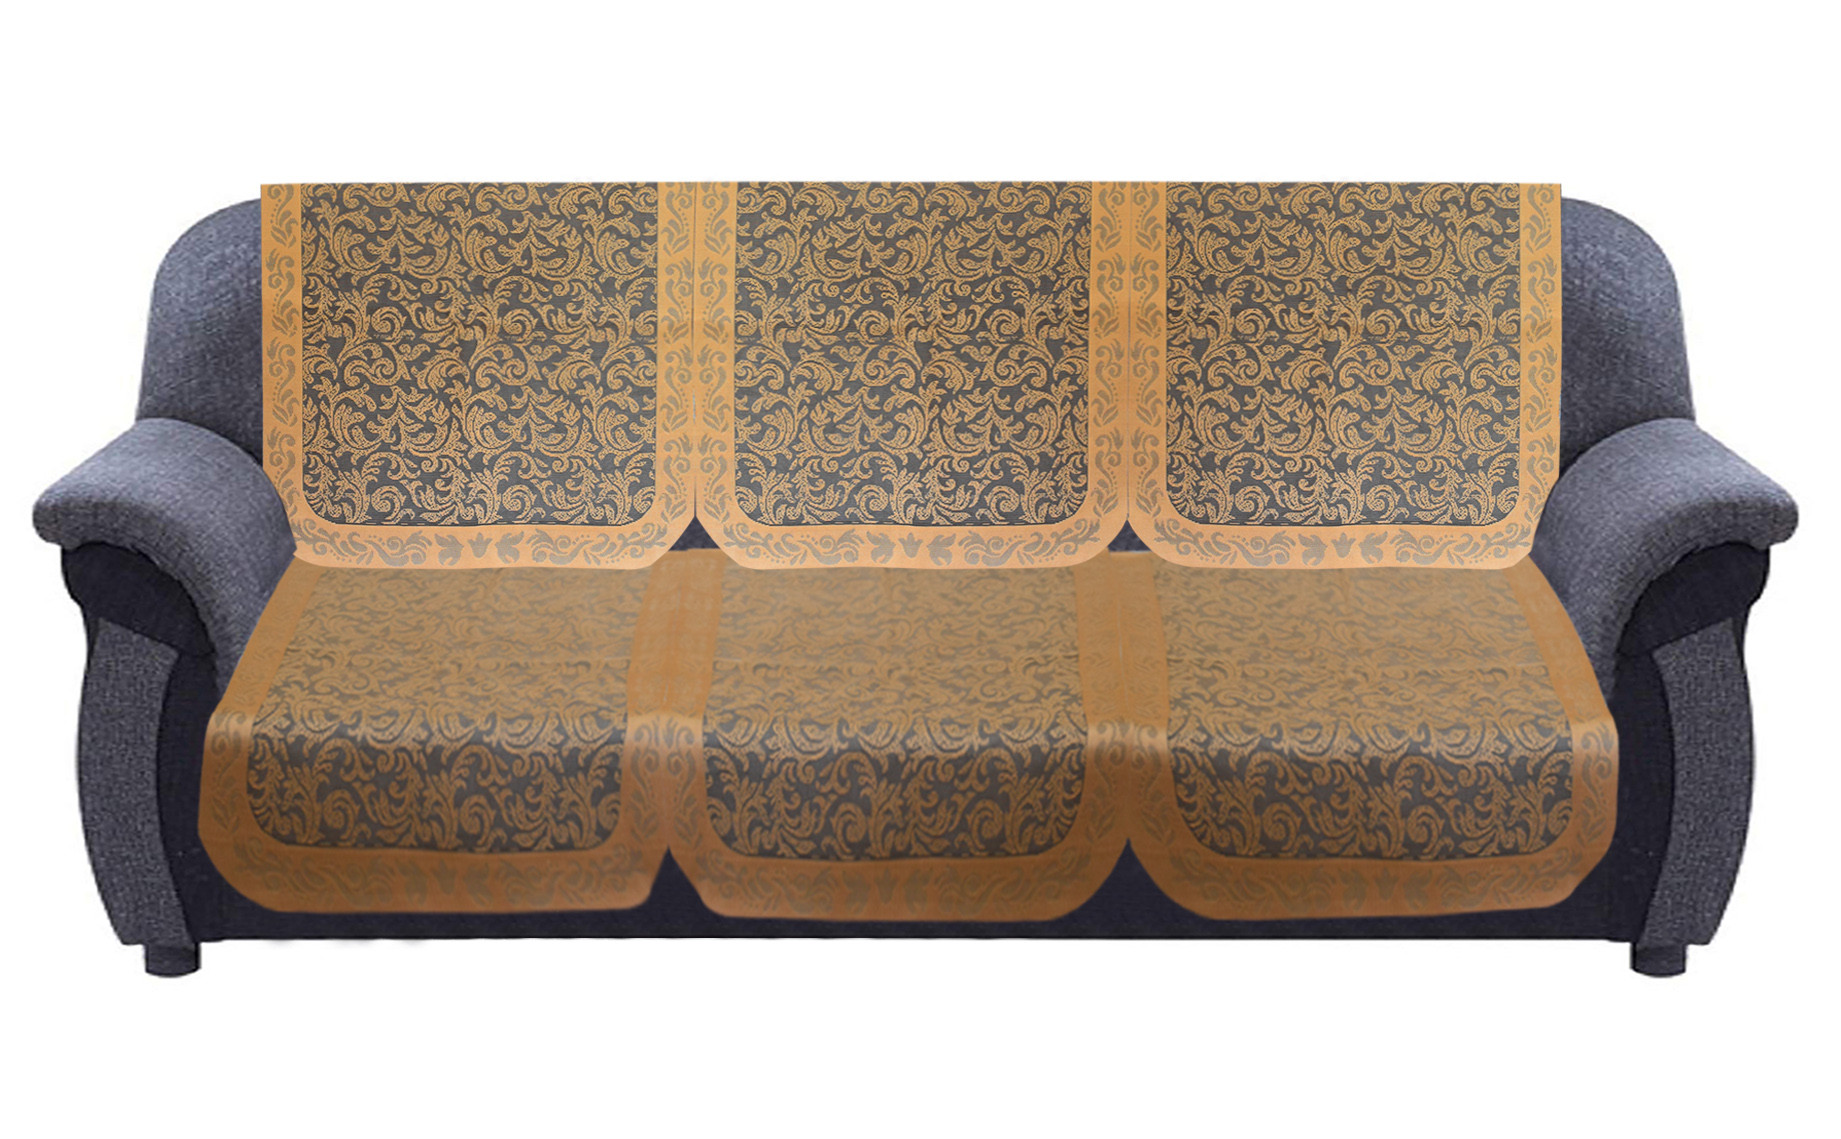 Kuber Industries Leaf Design 5 Seater Cotton Sofa Cover Set (Golden)